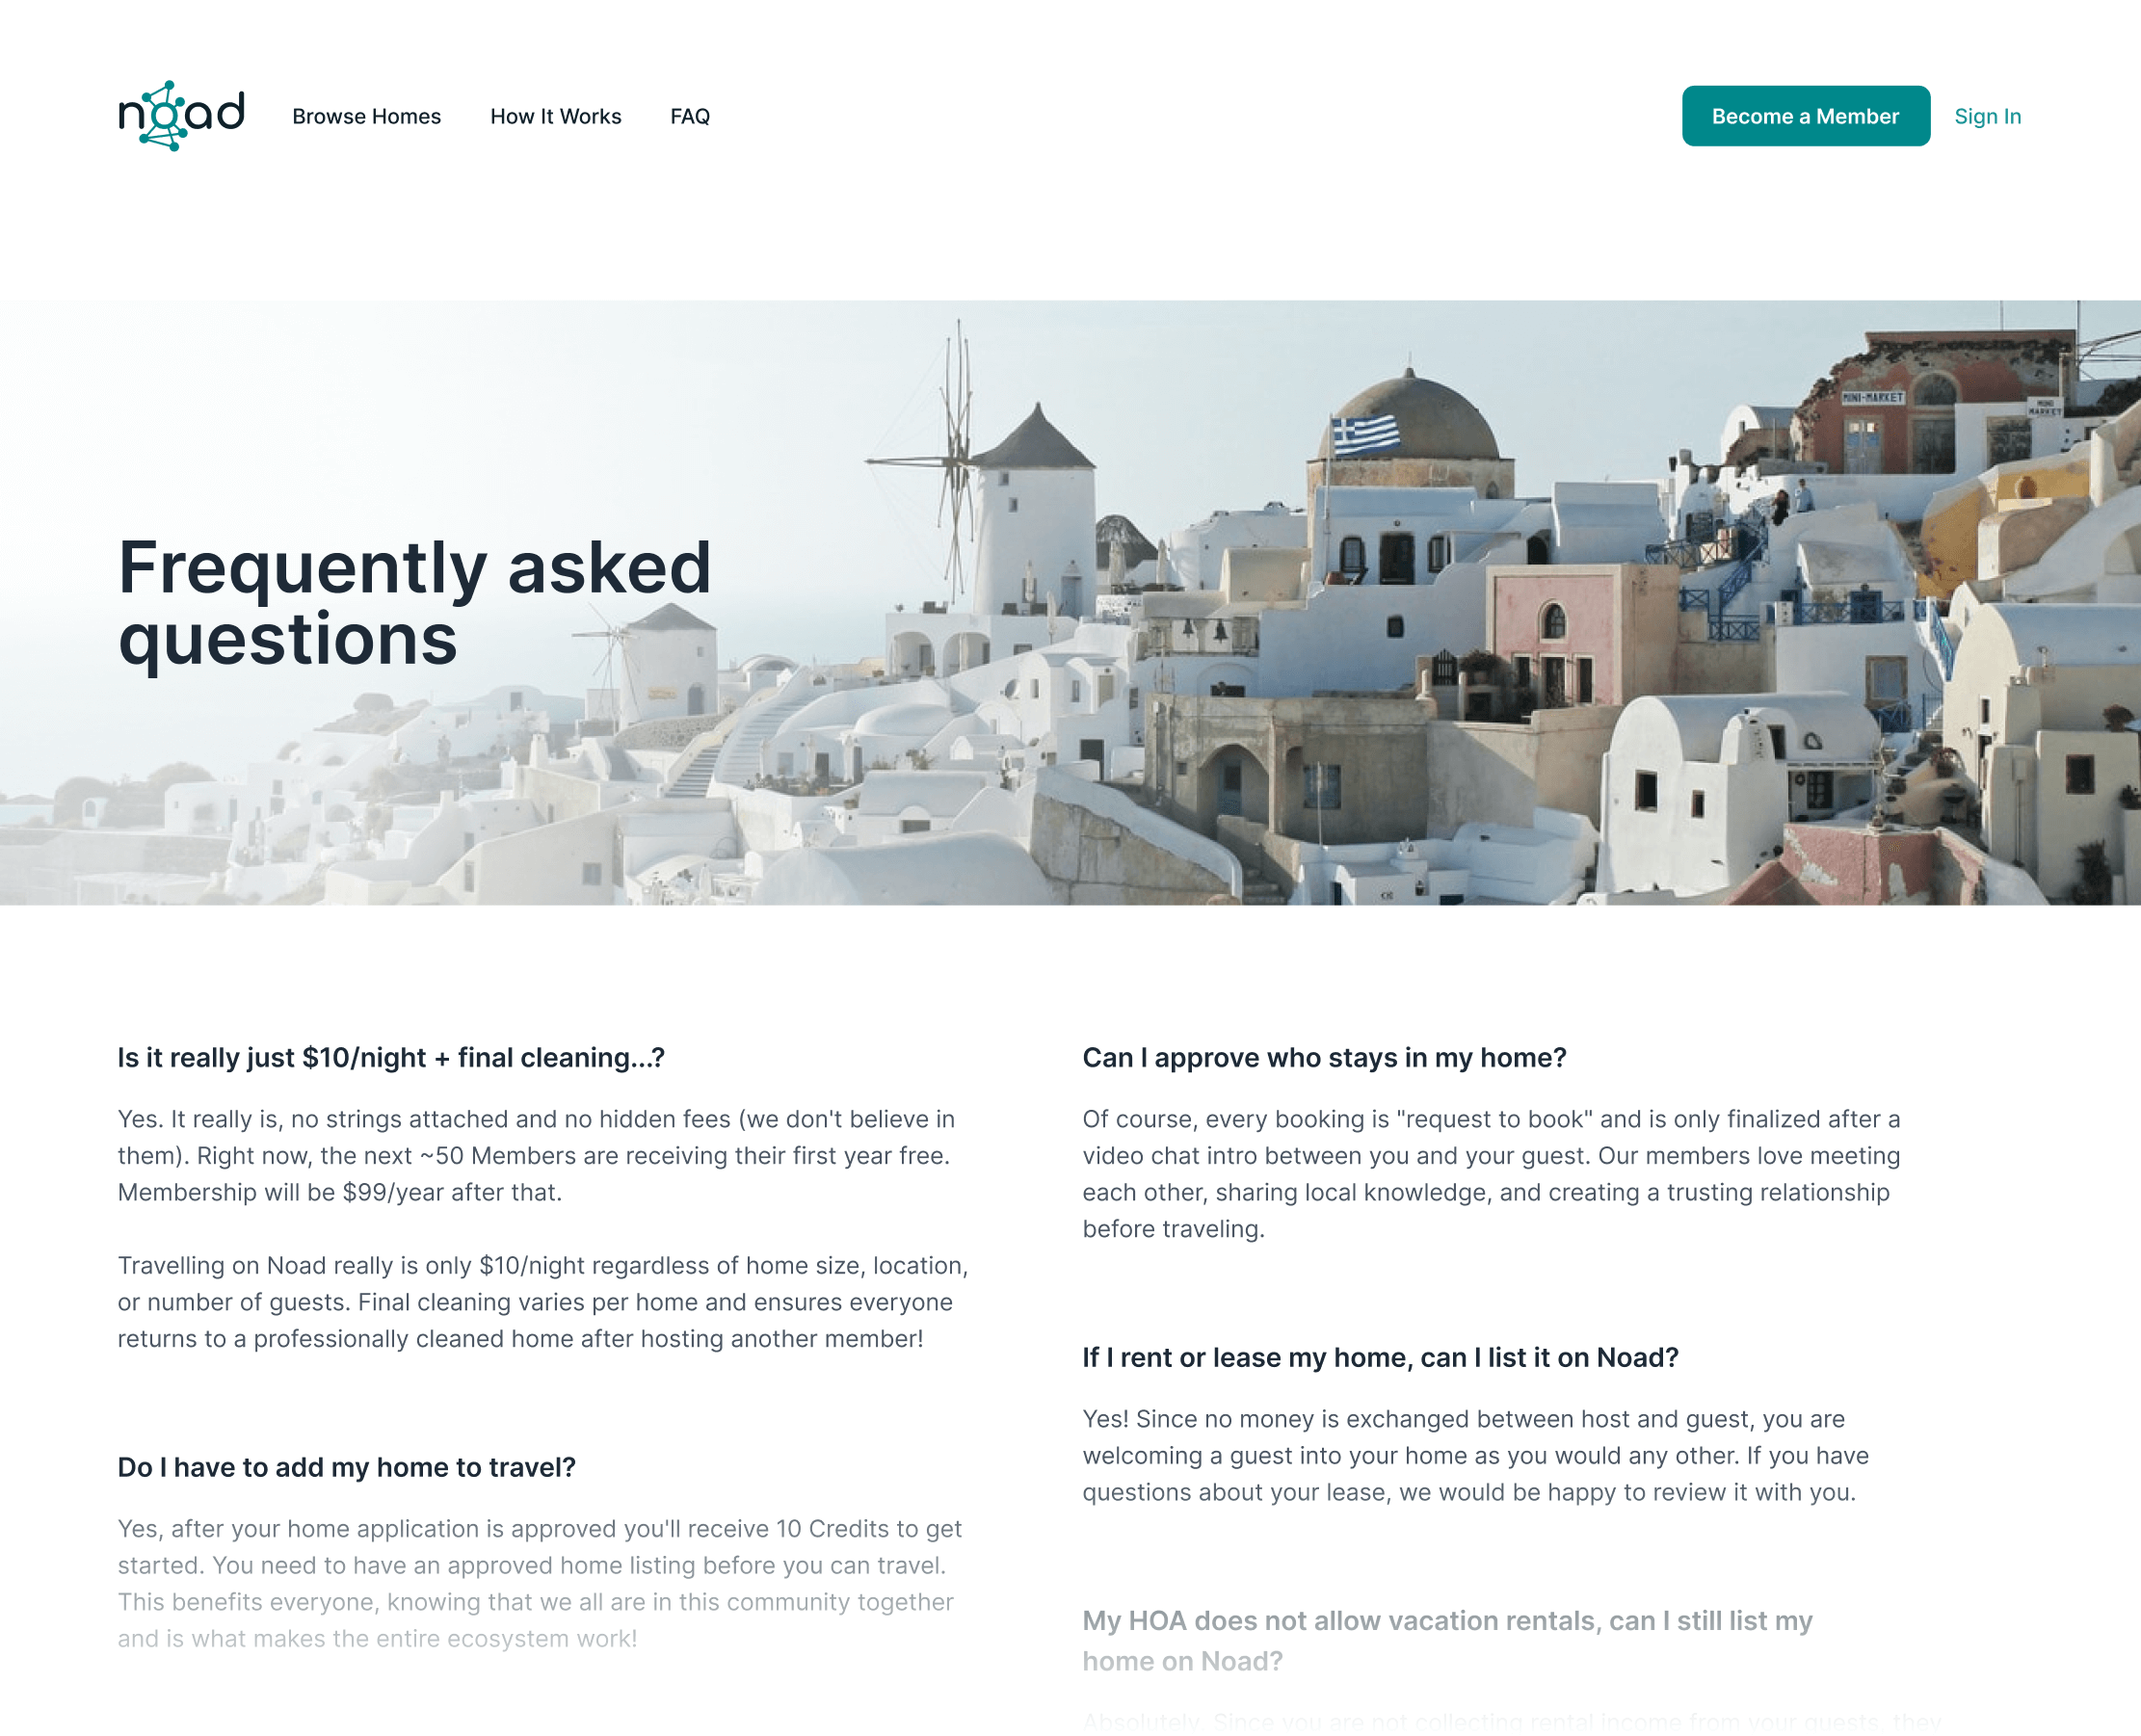 A screenshot of the FAQ page